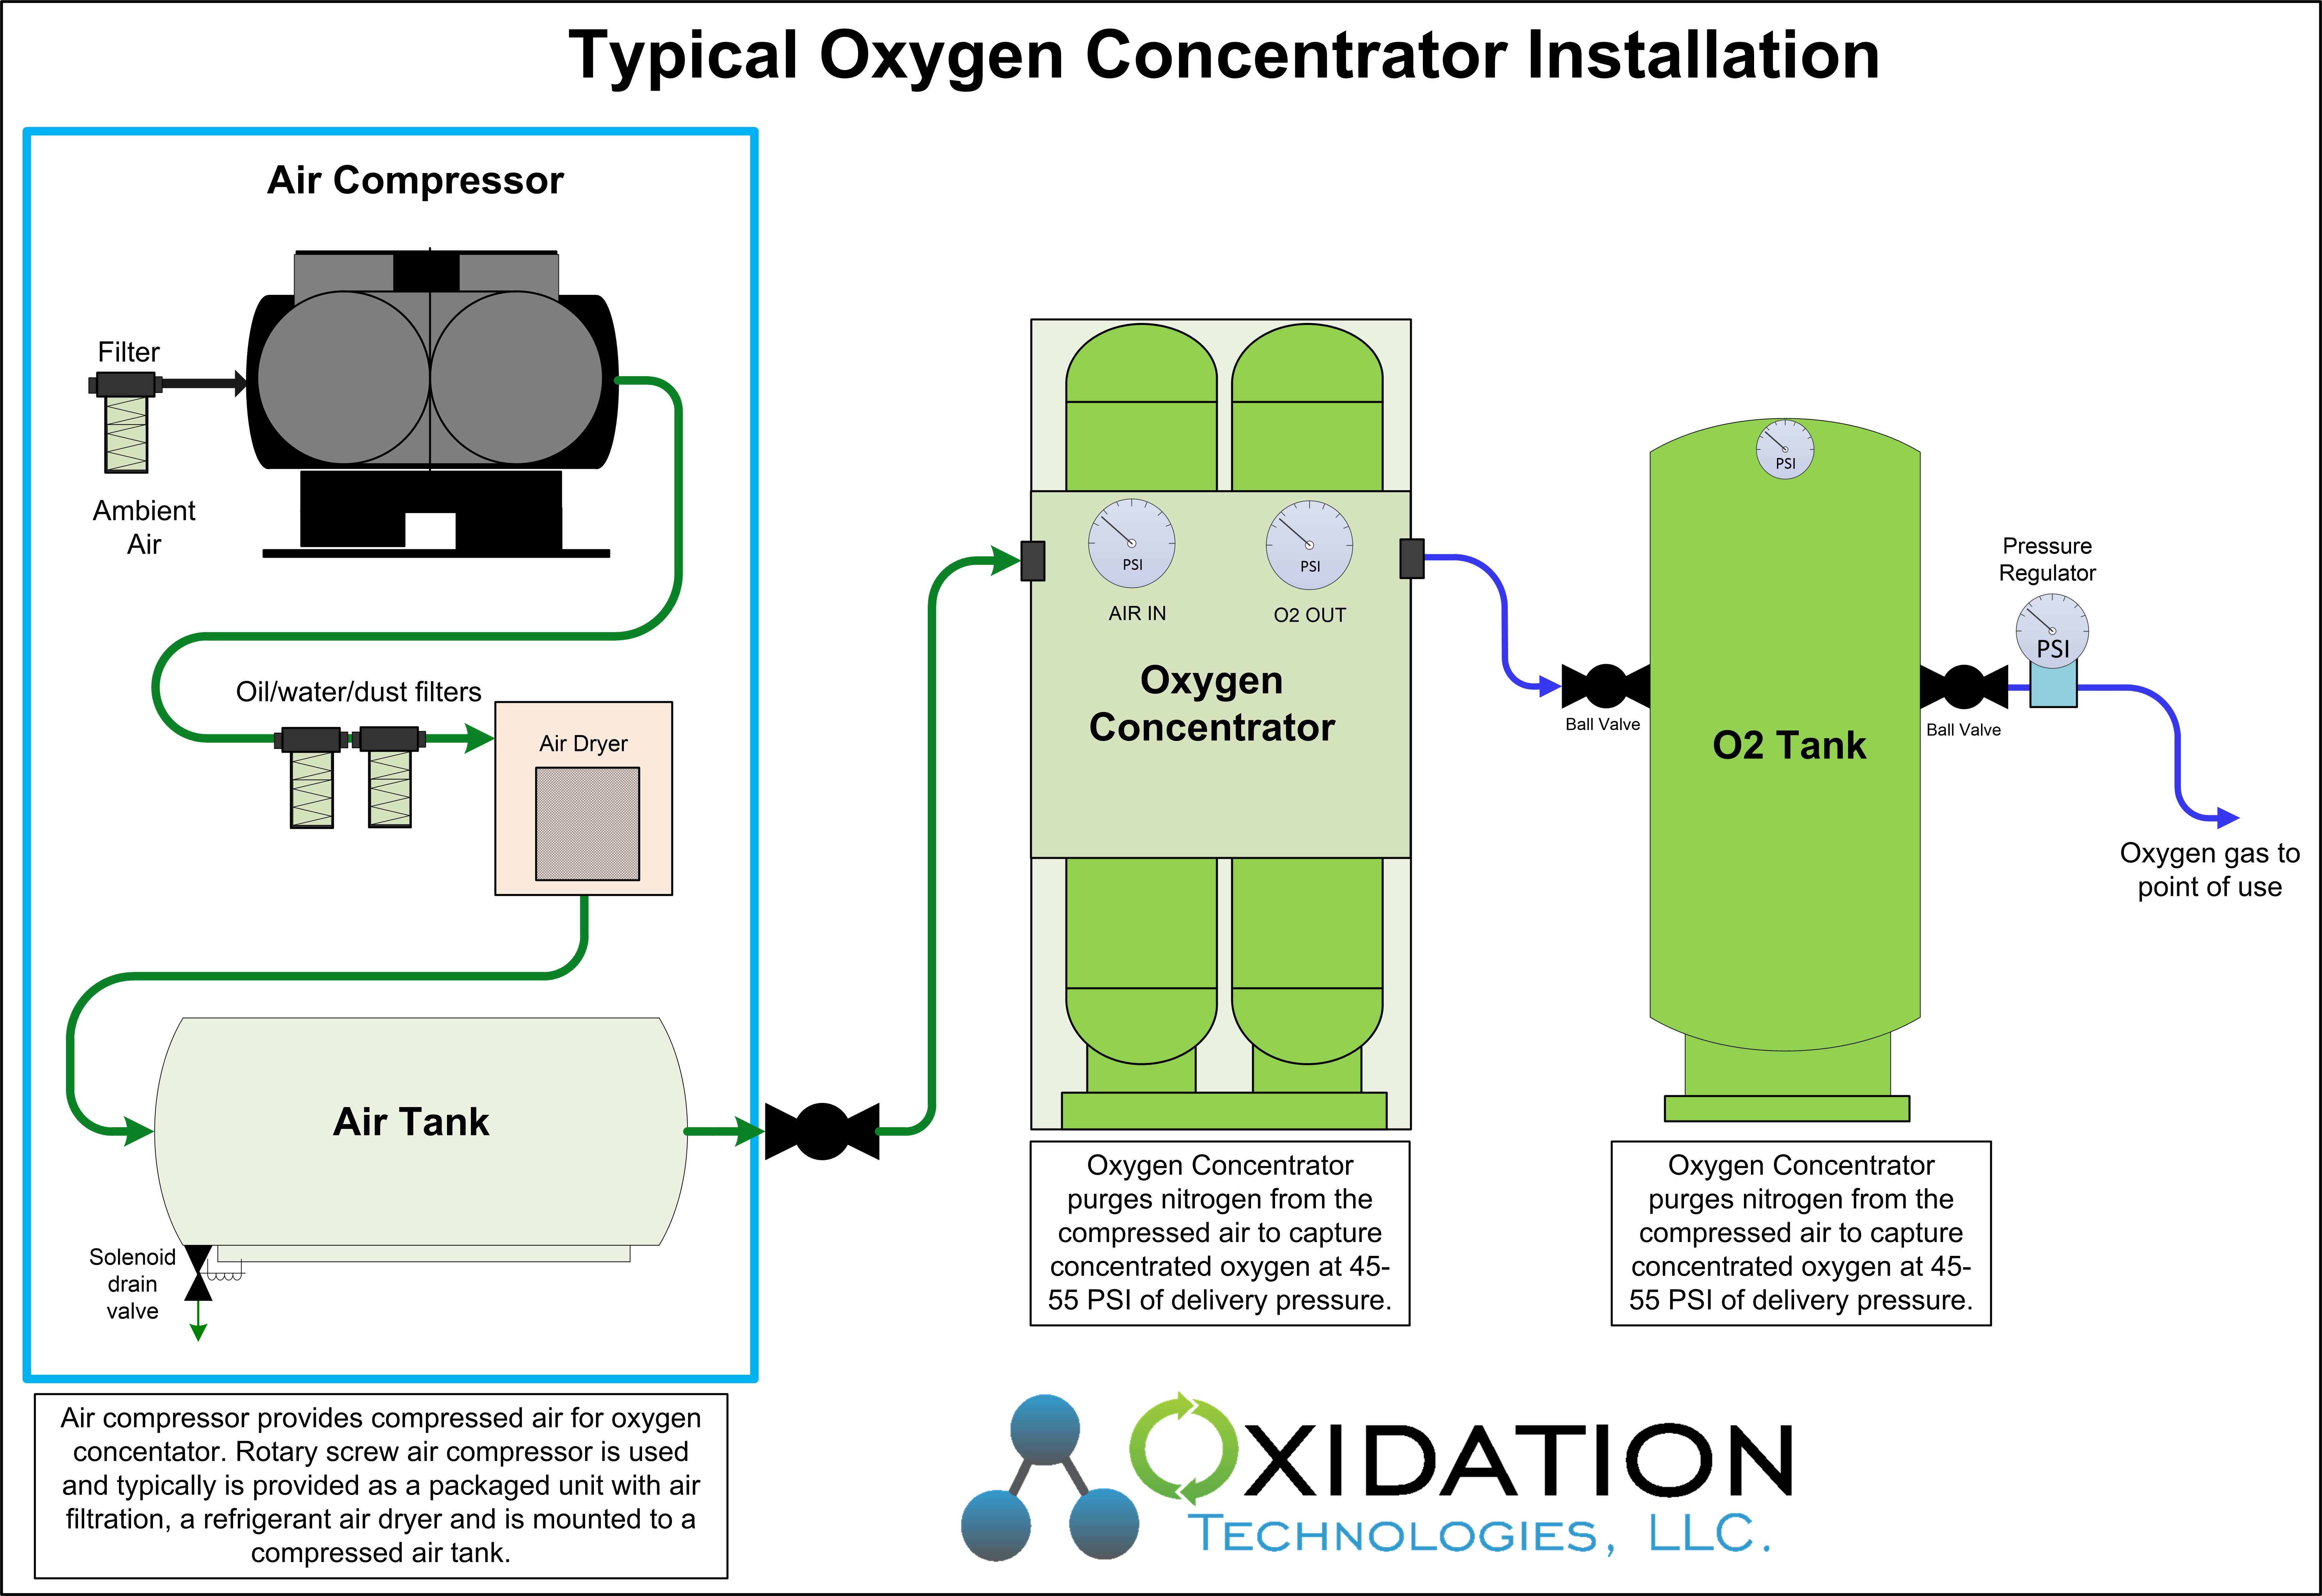 Oxypool Tabs (Oxygène actif) - 6 Kg CTX-100 - CTX